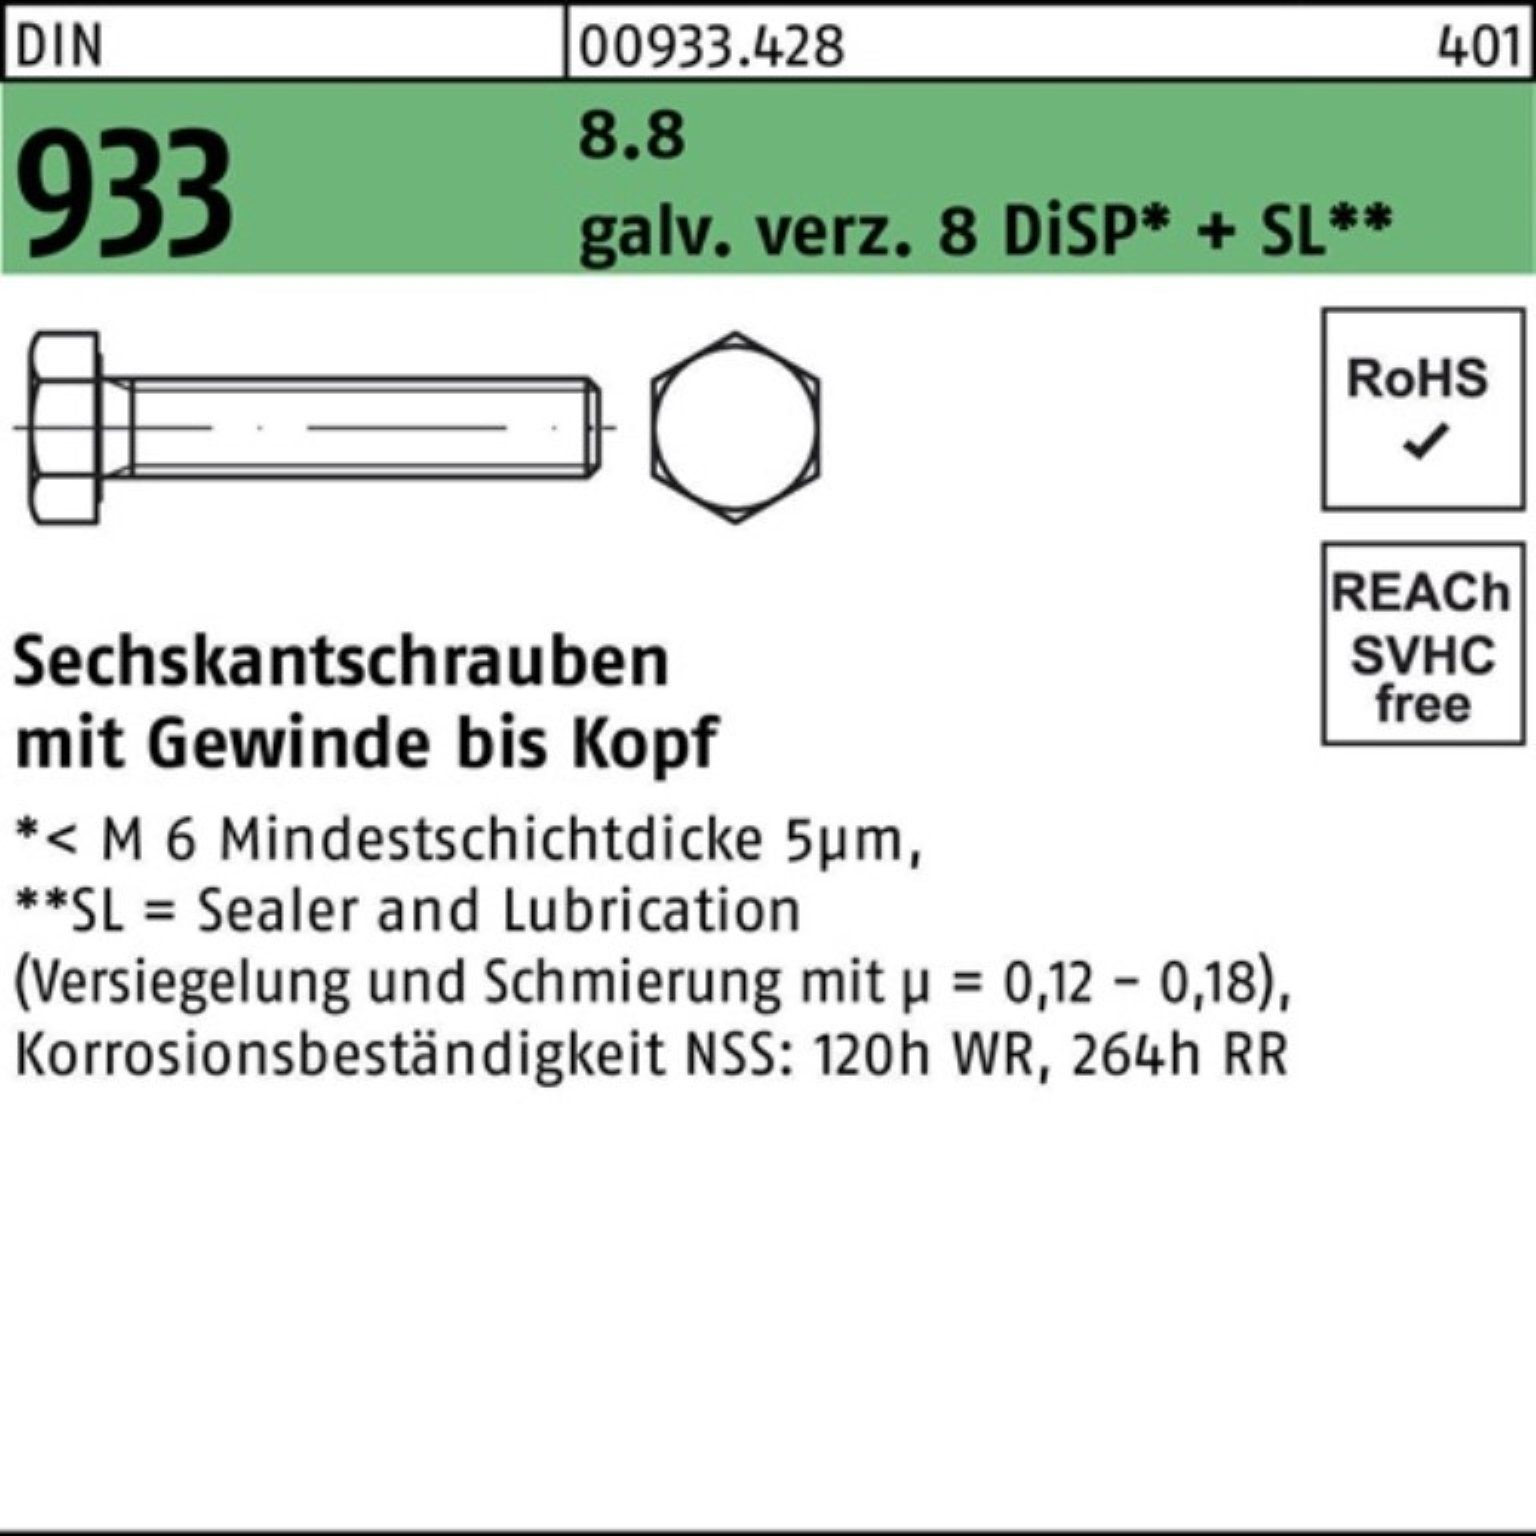 + Pack 8 80 Sechskantschraube SL Zn Reyher DiSP VG gal Sechskantschraube 8.8 933 200er M8x DIN